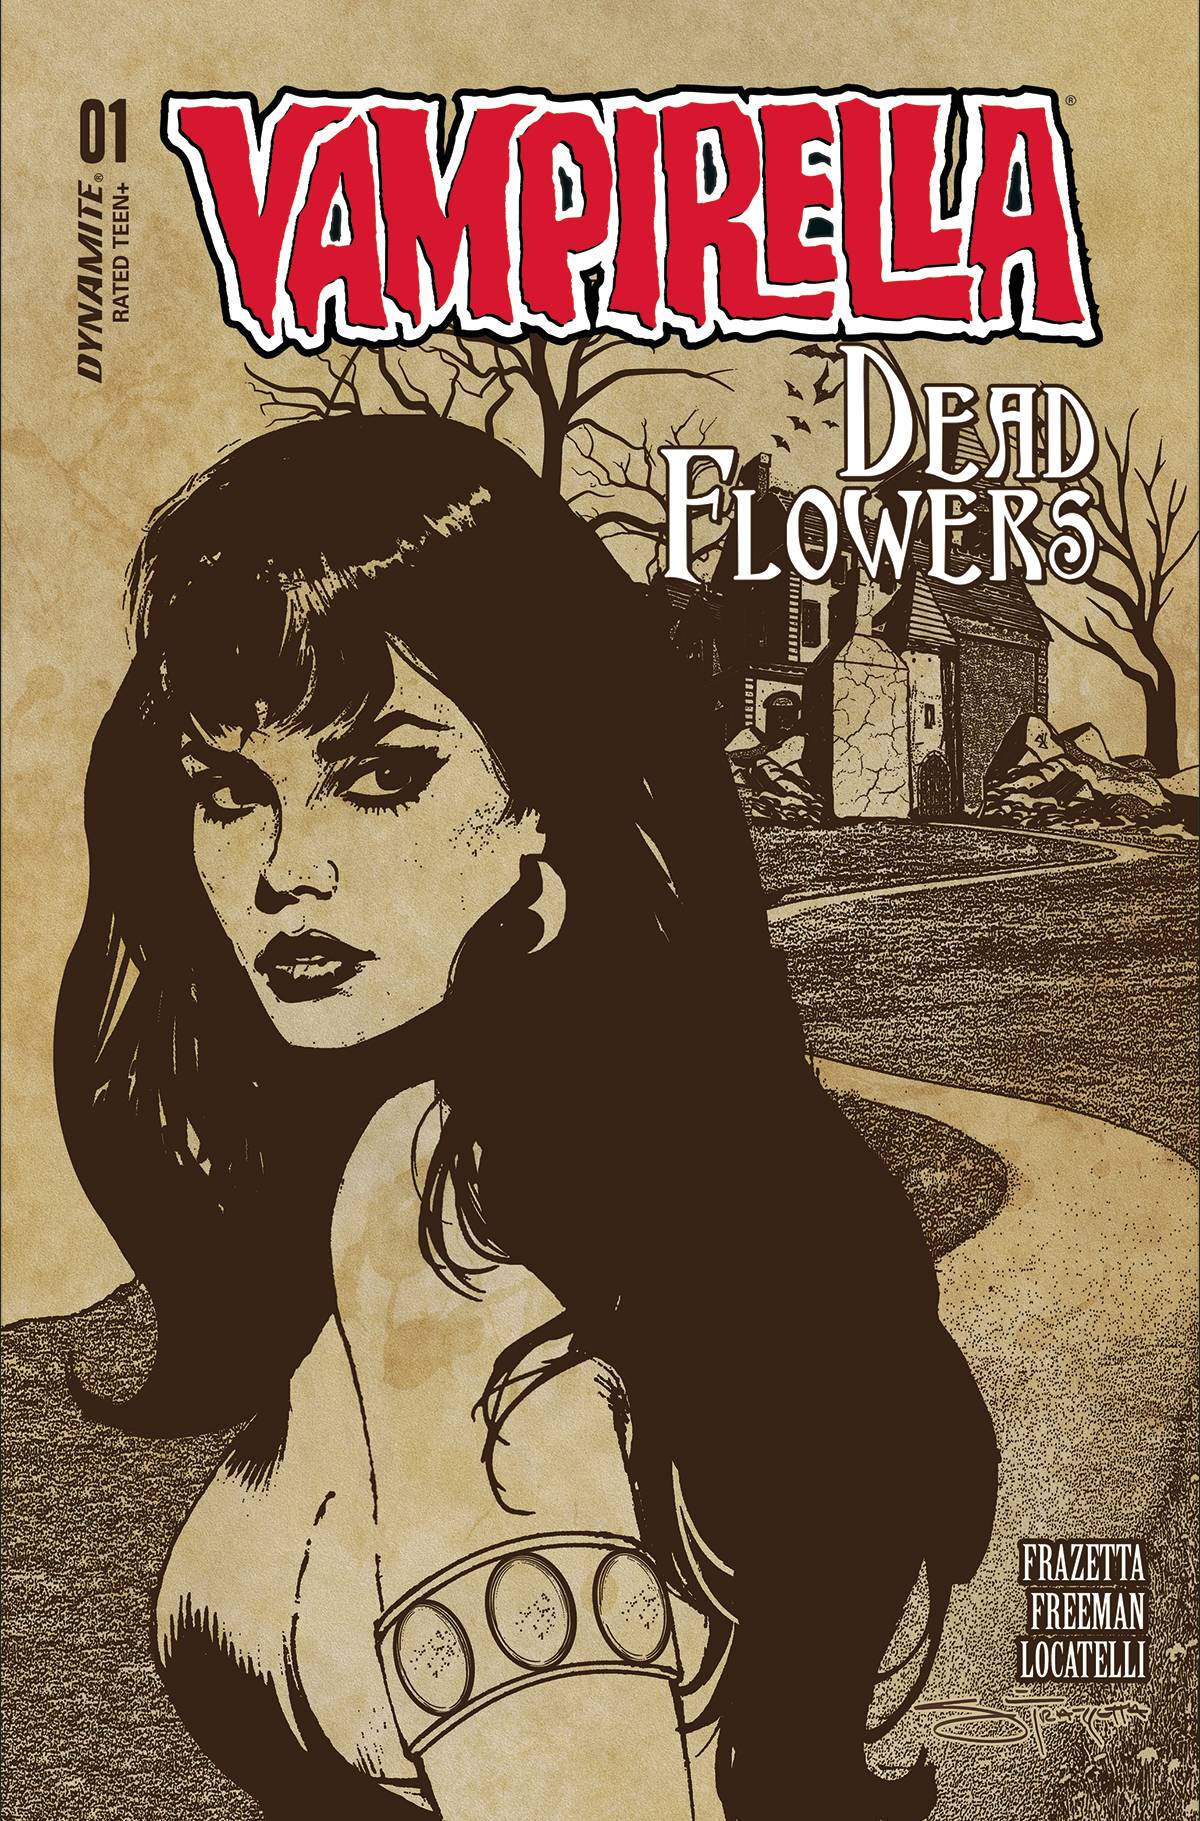 Vampirella: Dead Flowers #1-4 by Sara Frazetta (Comic Books)